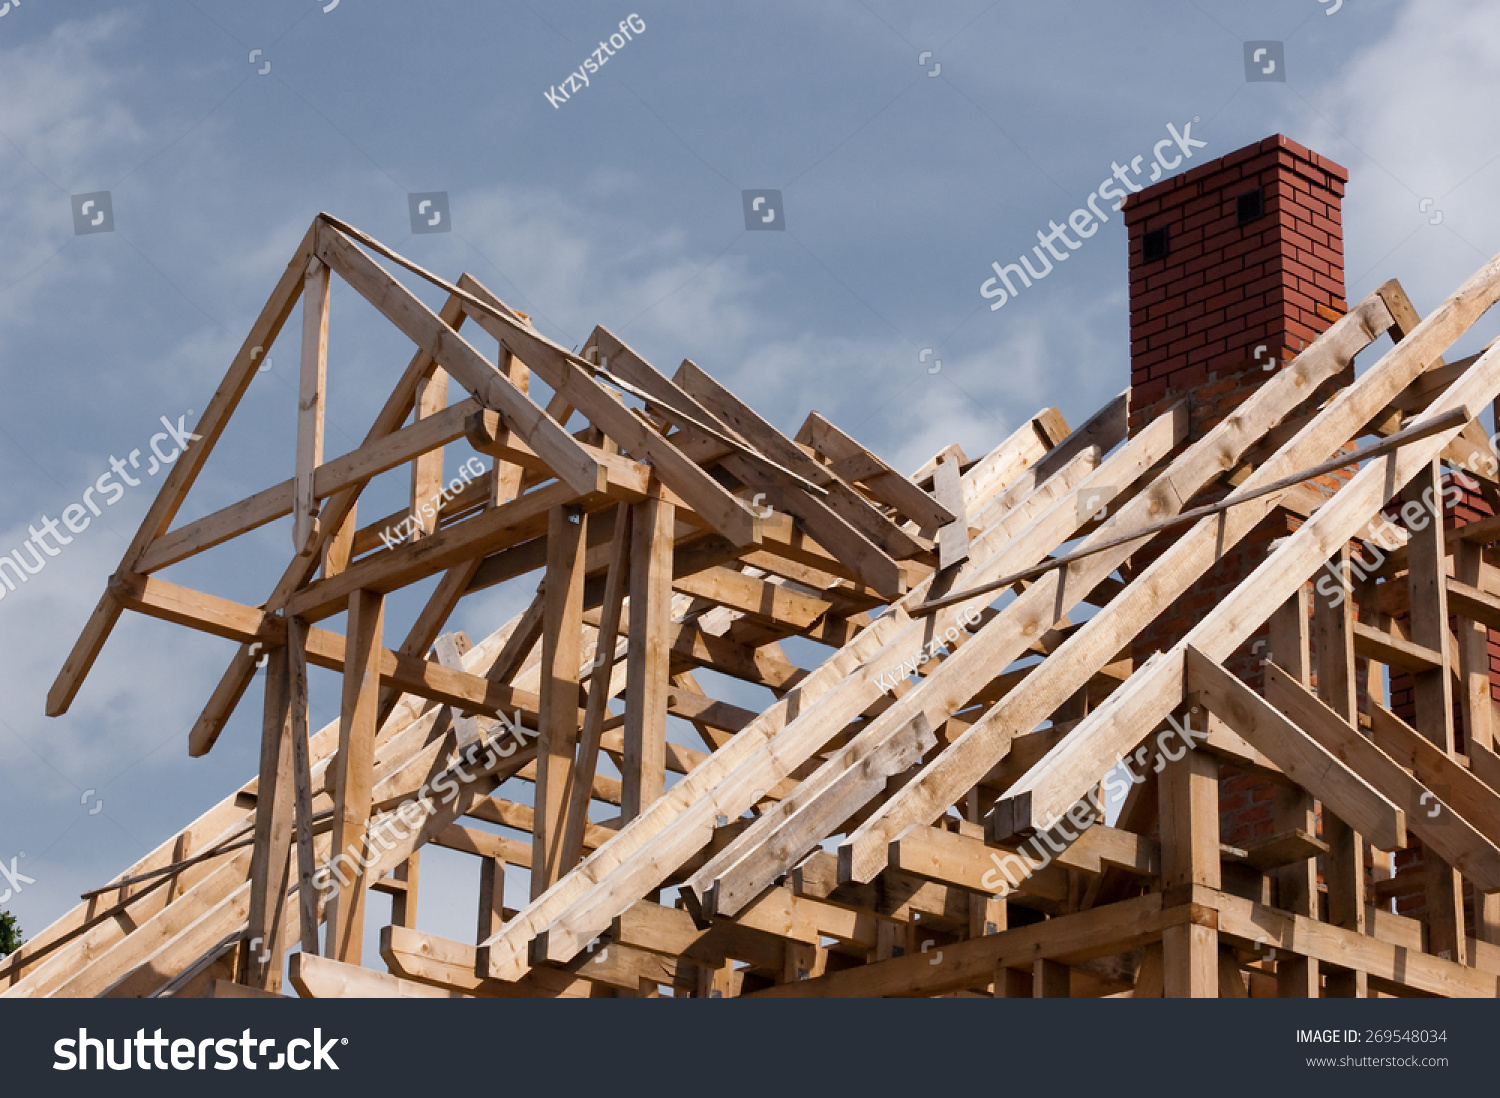 Home Construction Stock Photo 269548034 - Shutterstock